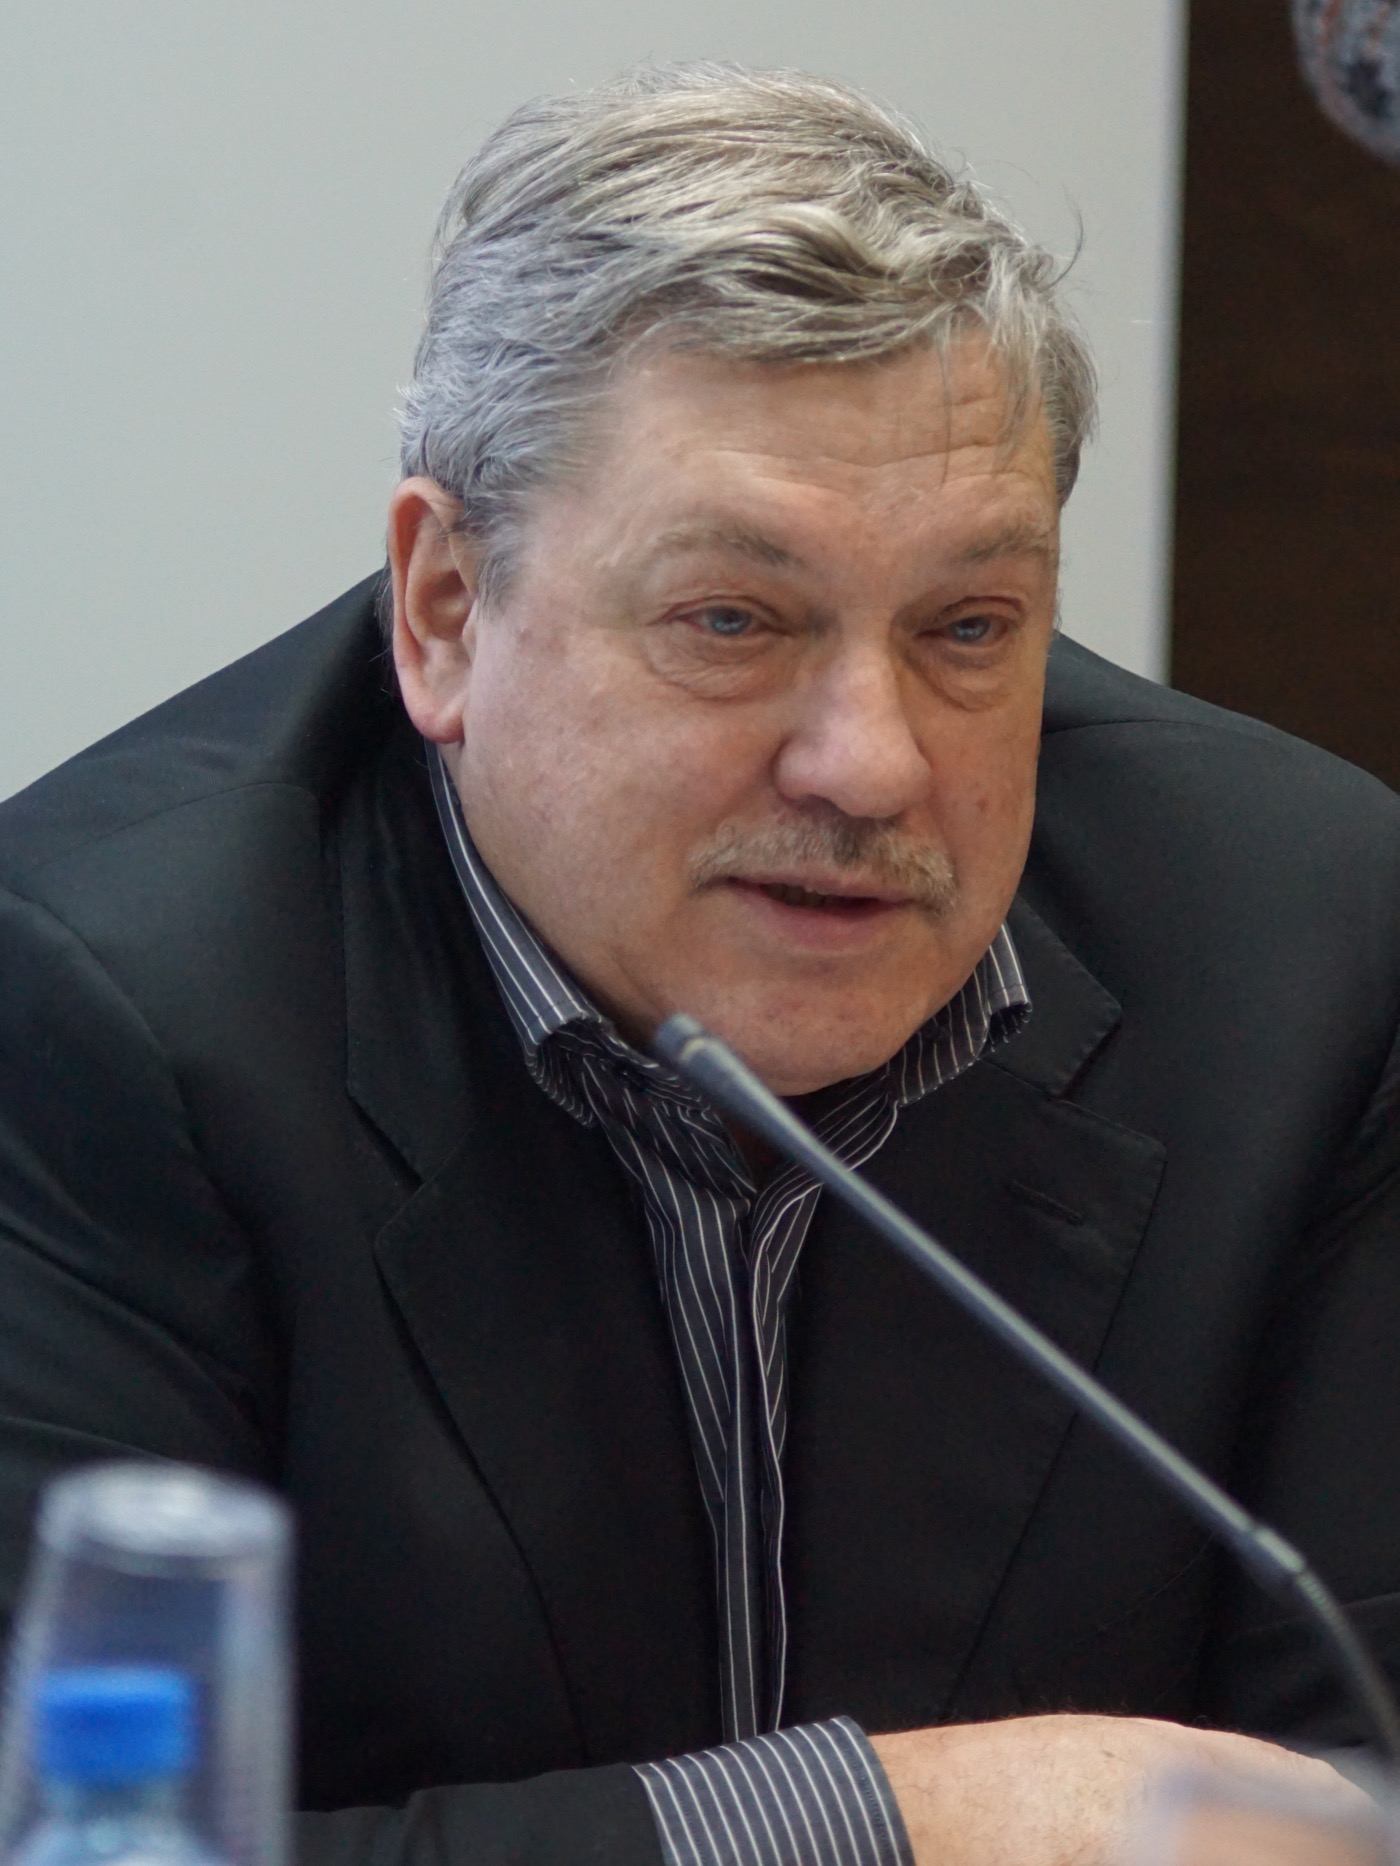 Джикович Владимир Велийкович – Президент Ассоциации Банков Северо-Запада